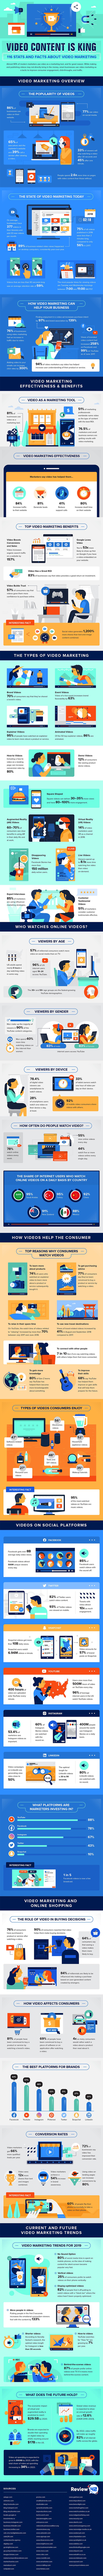 Video Marketing Statistics - Infographic